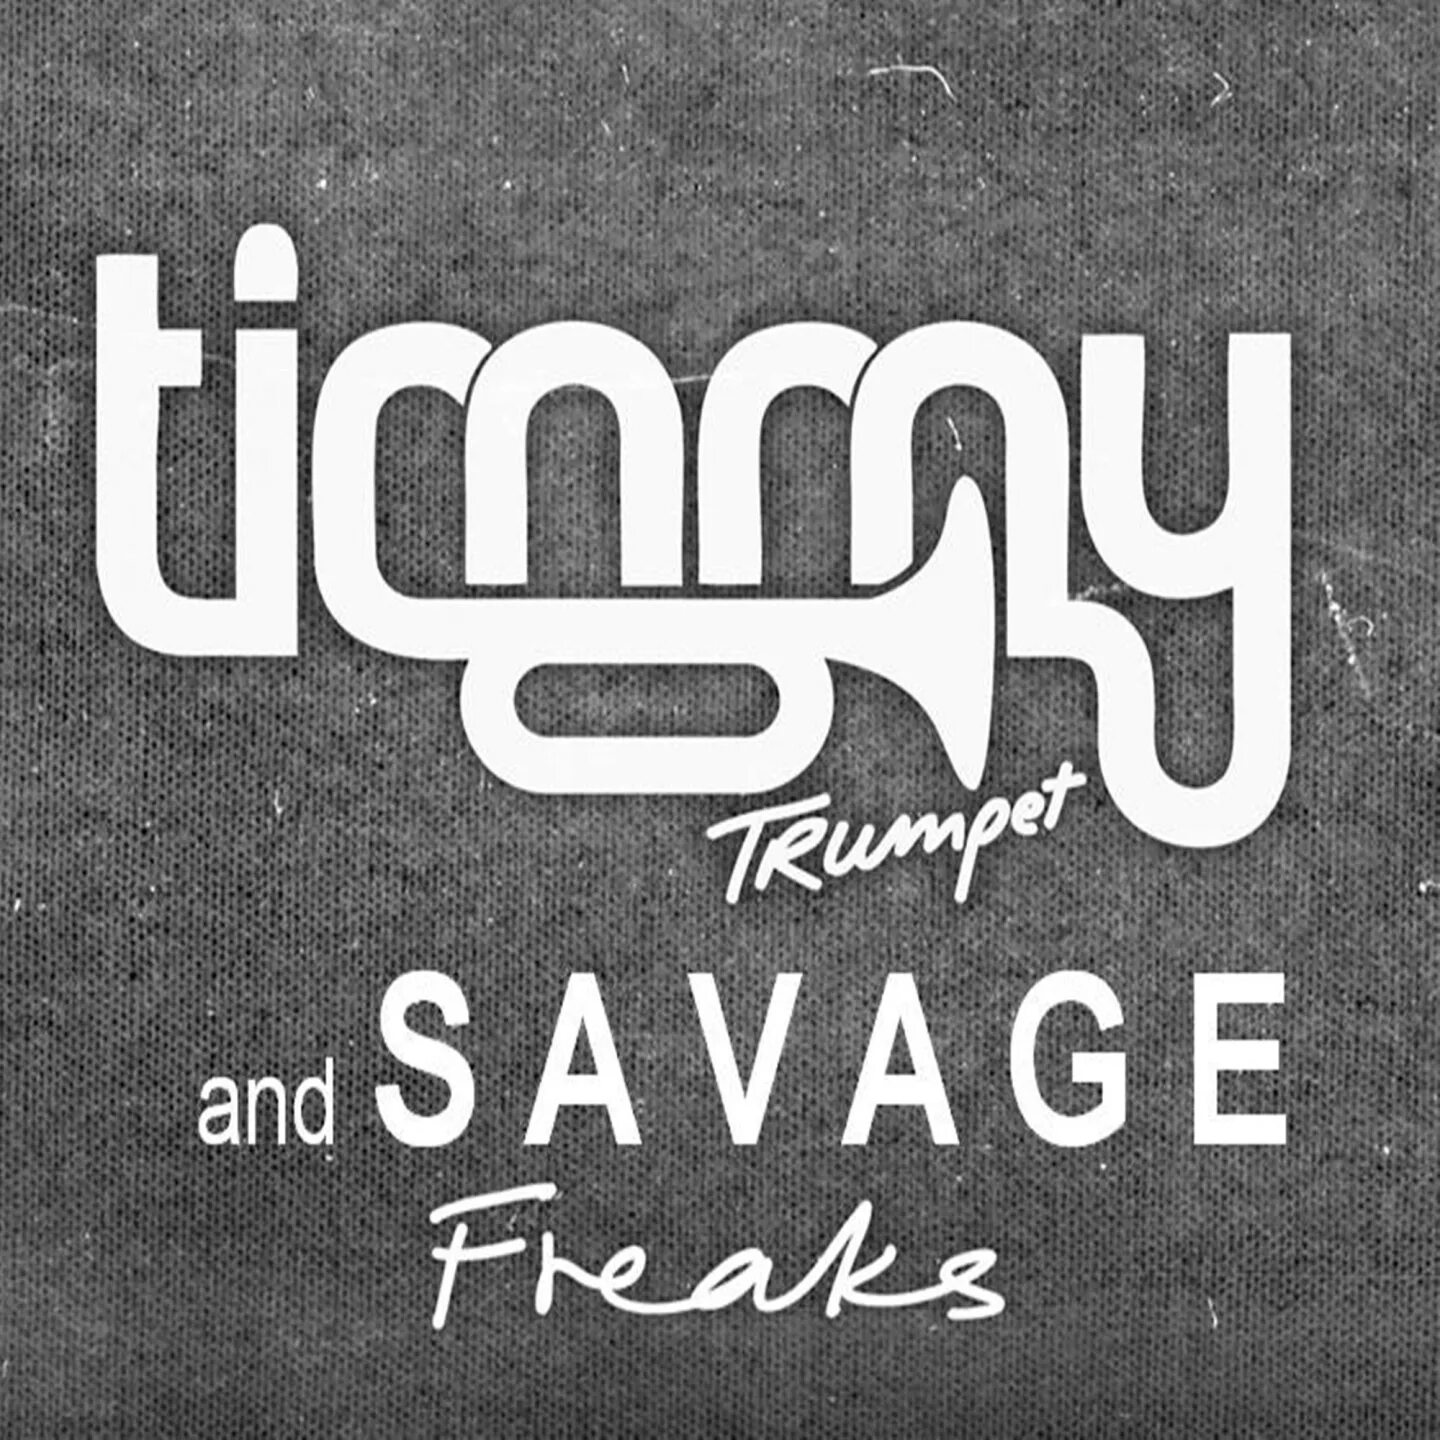 Freaks песня слушать. Тимми трампет Саведж. Timmy Trumpet Savage Freaks. Freaks обложка. Freaks обложка альбома.